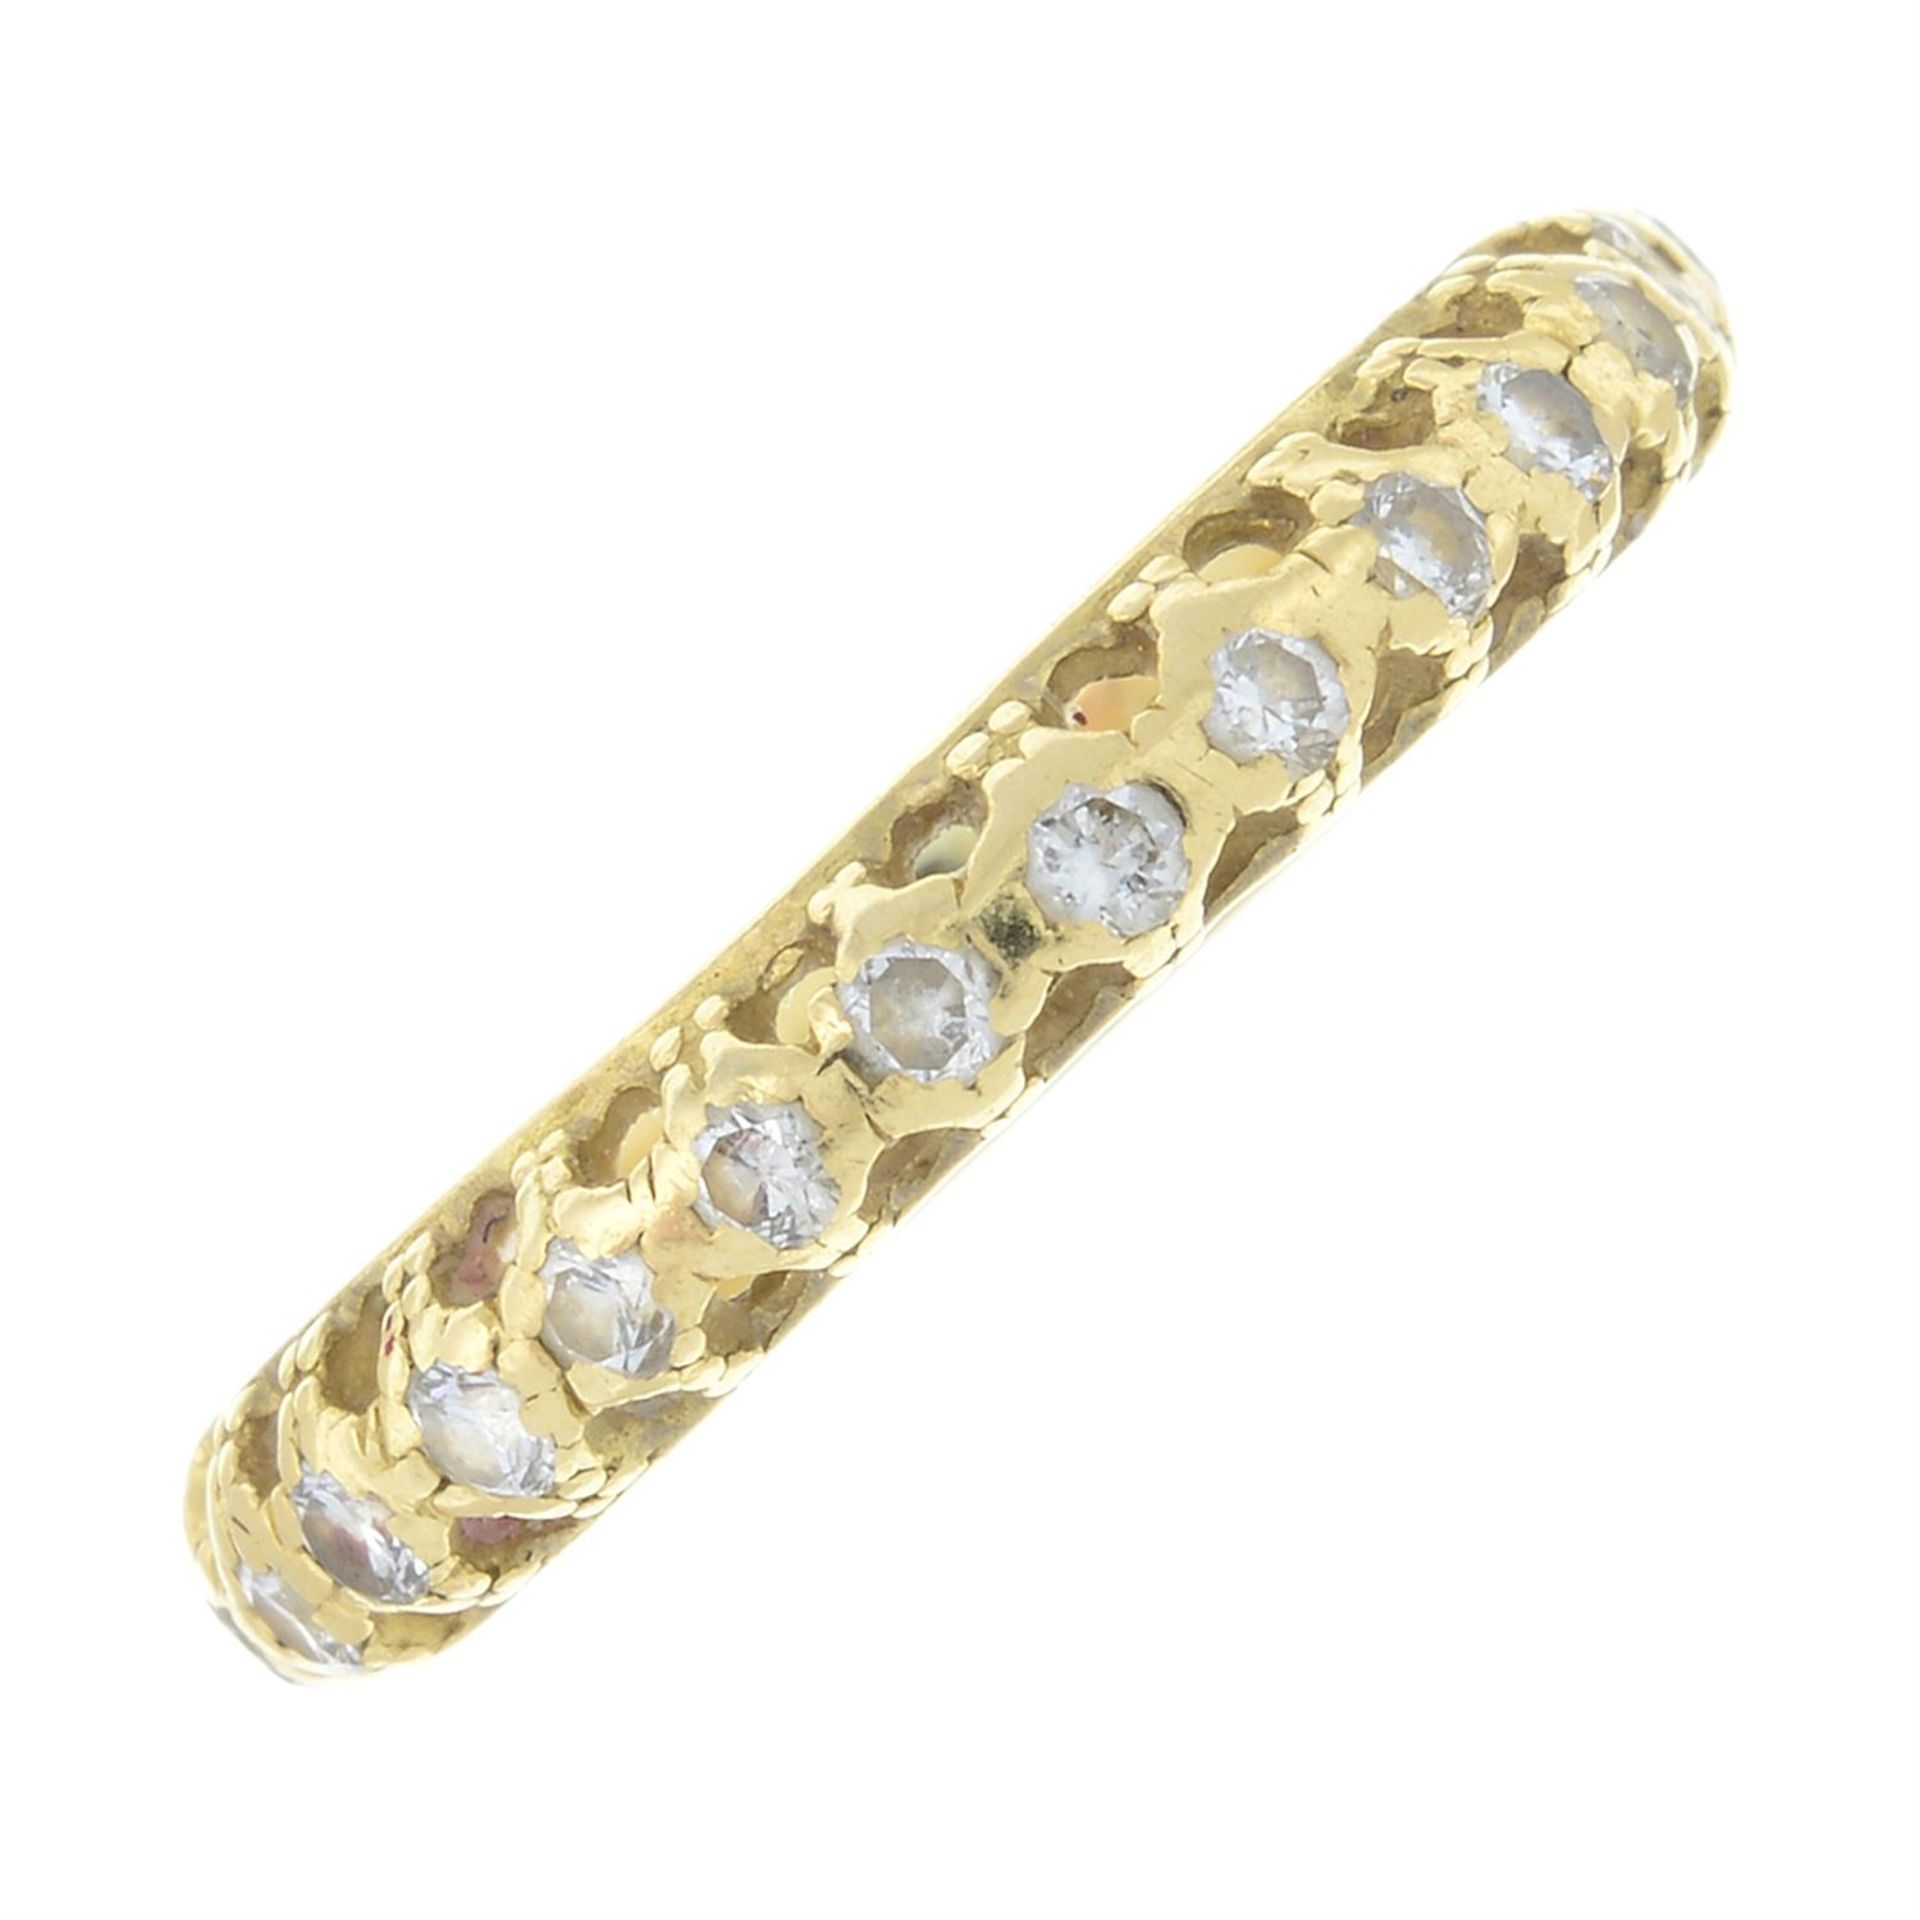 An 18ct gold brilliant-cut diamond half eternity ring.